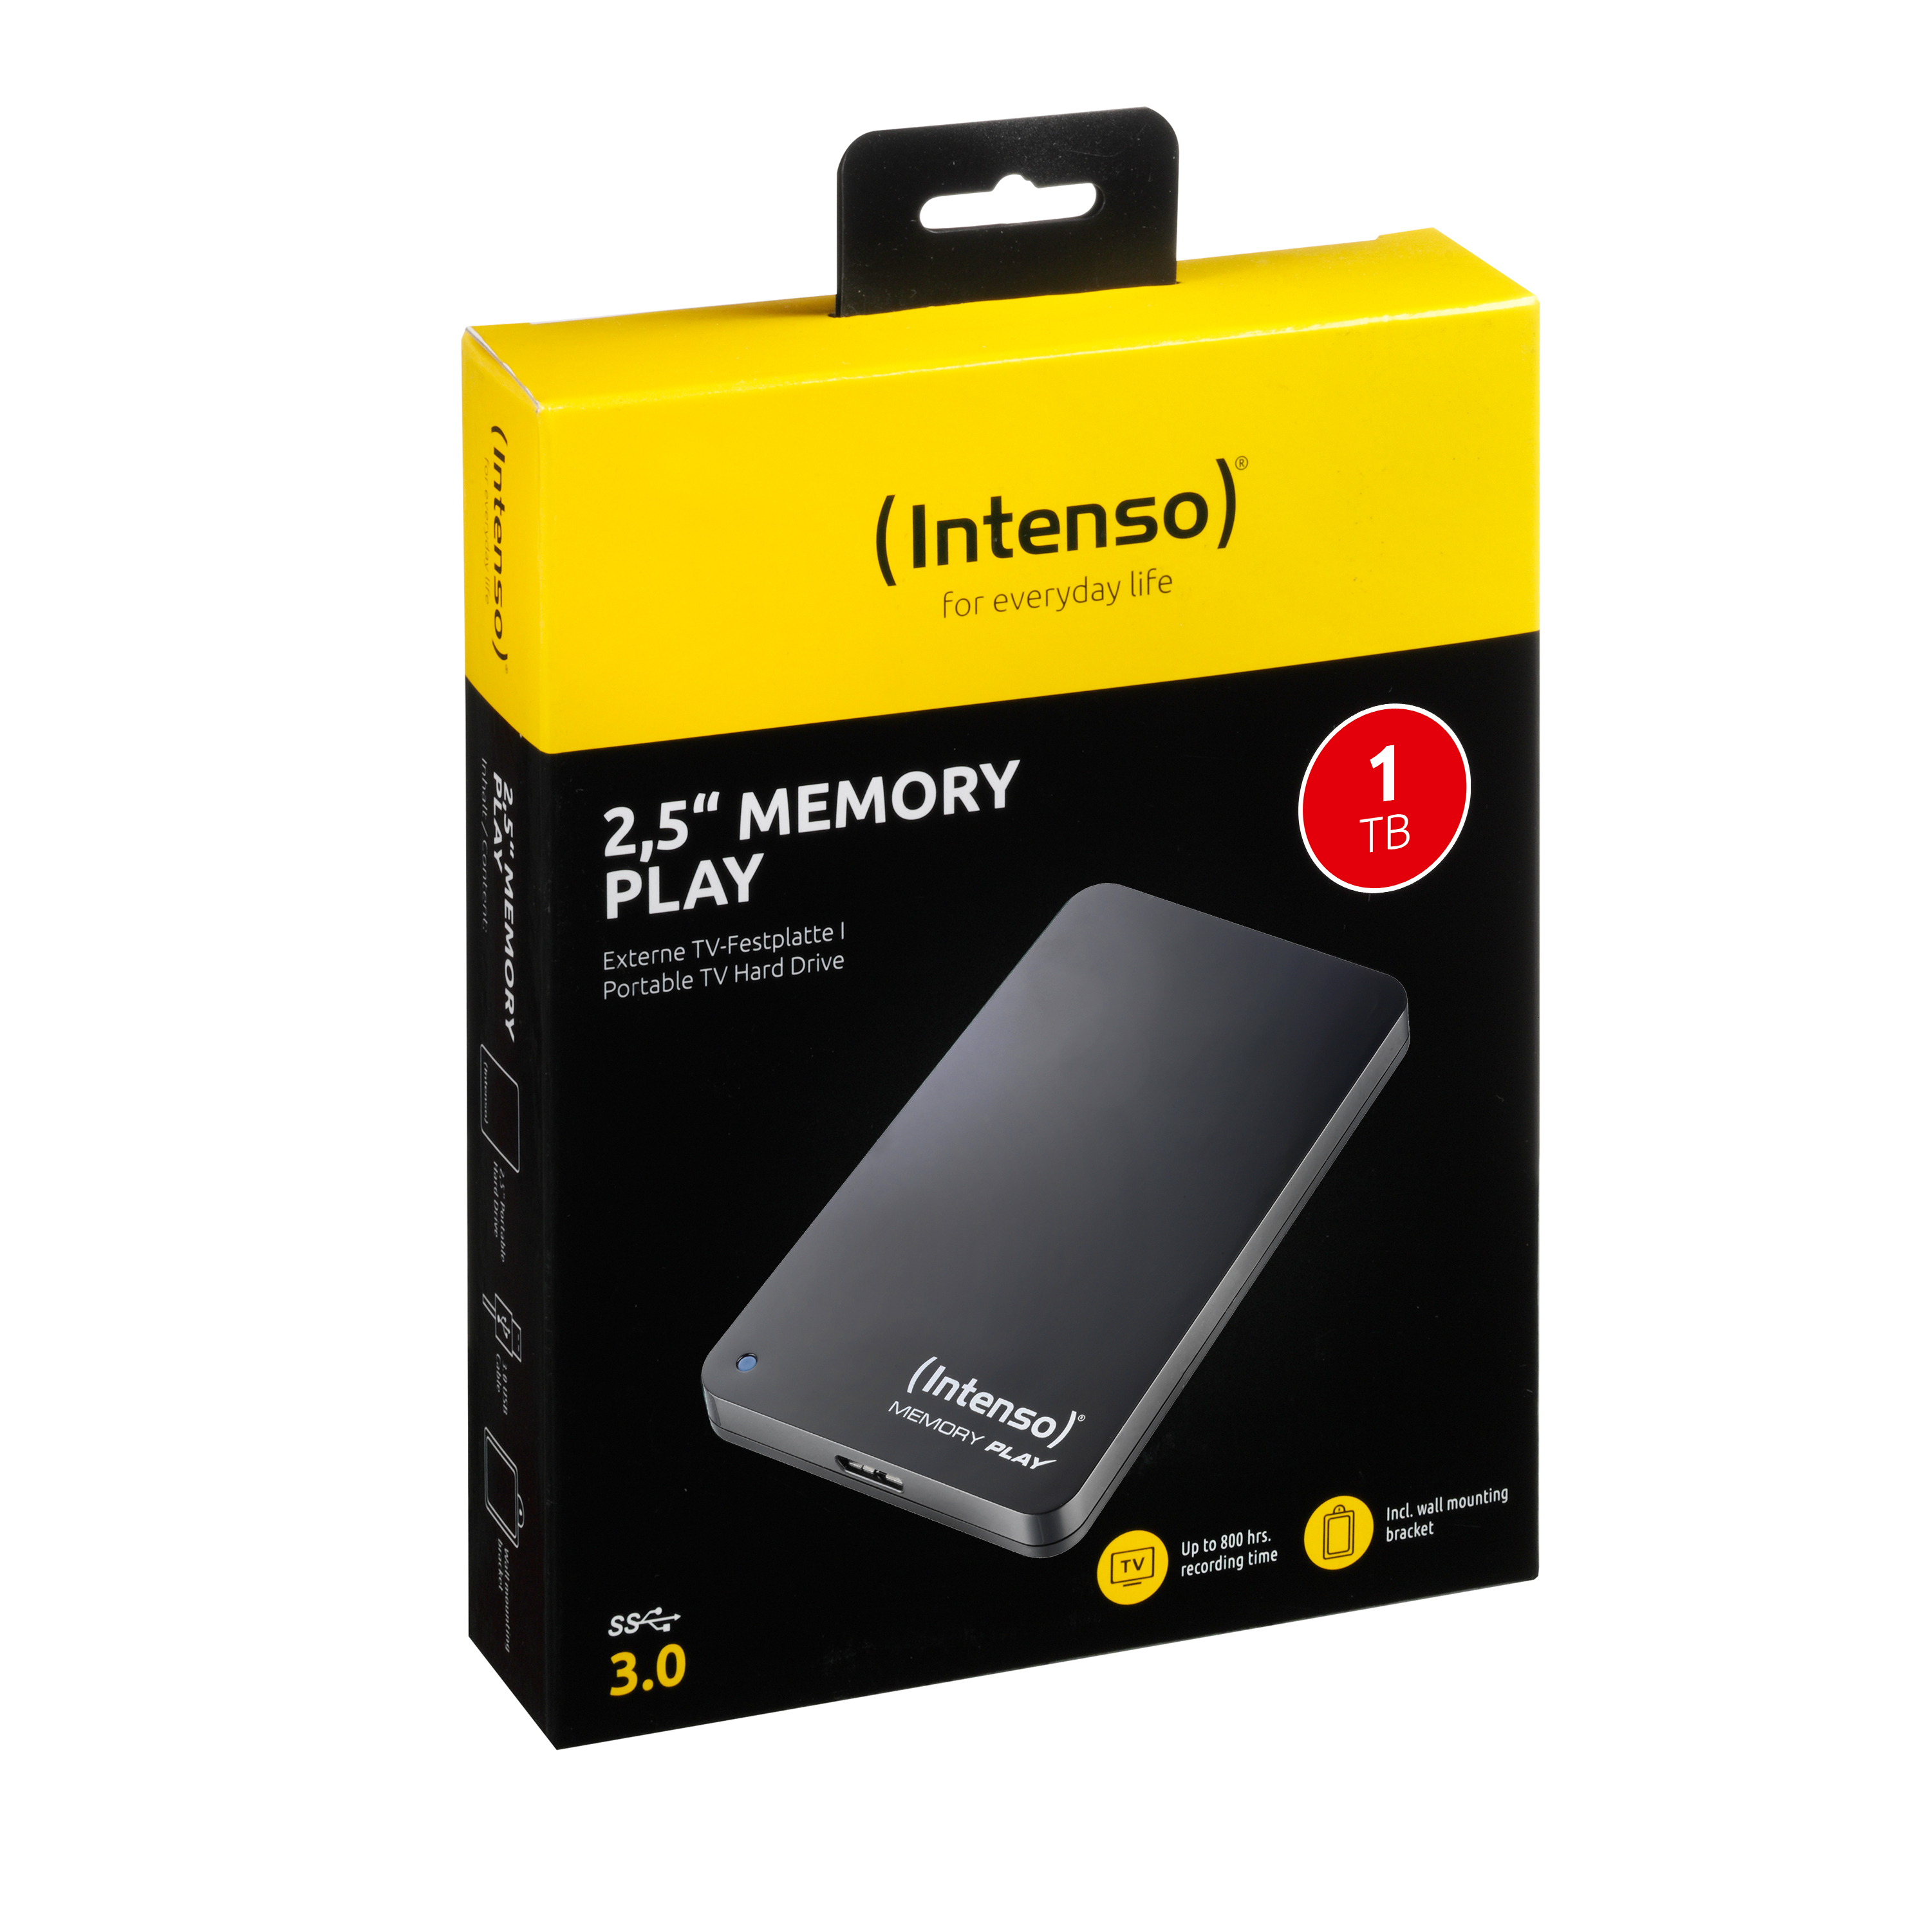 Intenso MEMORY PLAY - Festplatte - 1 TB - extern (tragbar)